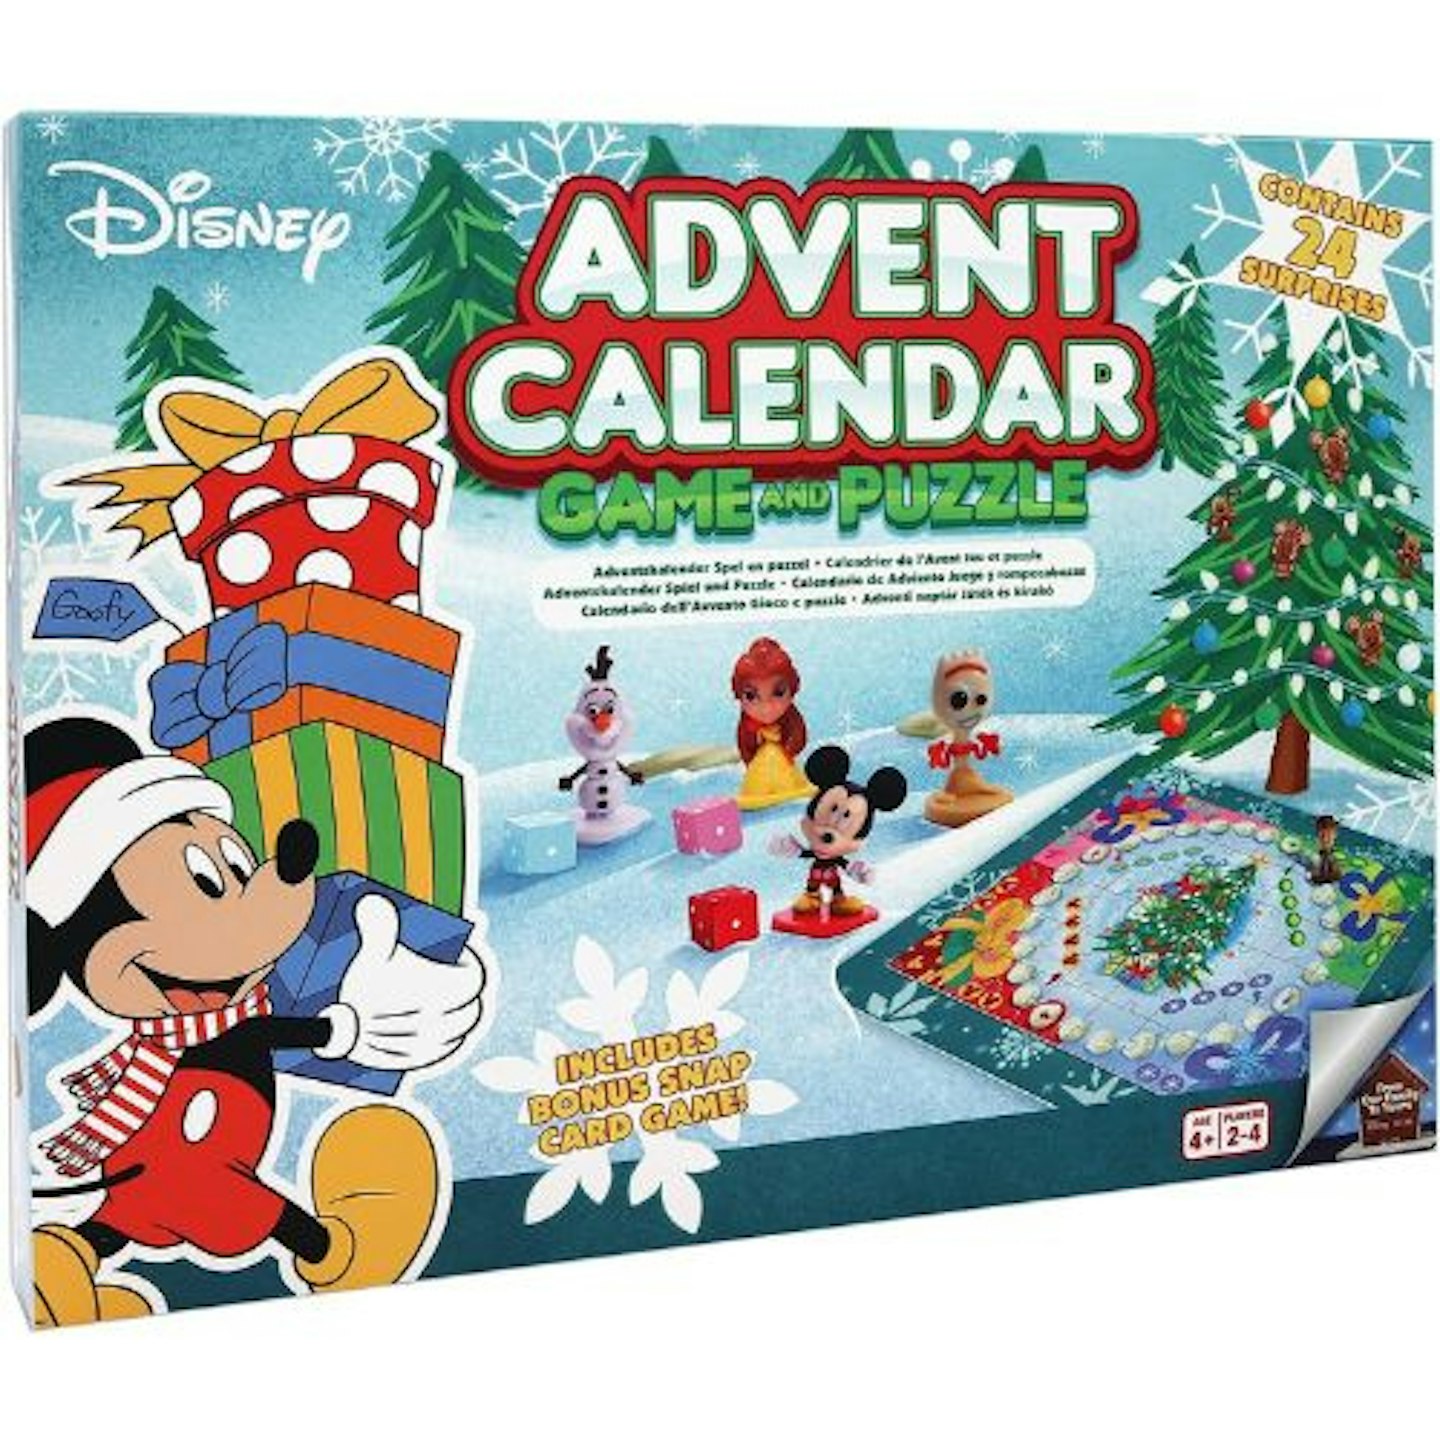 Best Disney Advent calendars Disney Advent Calendar - Official Christmas Board Game